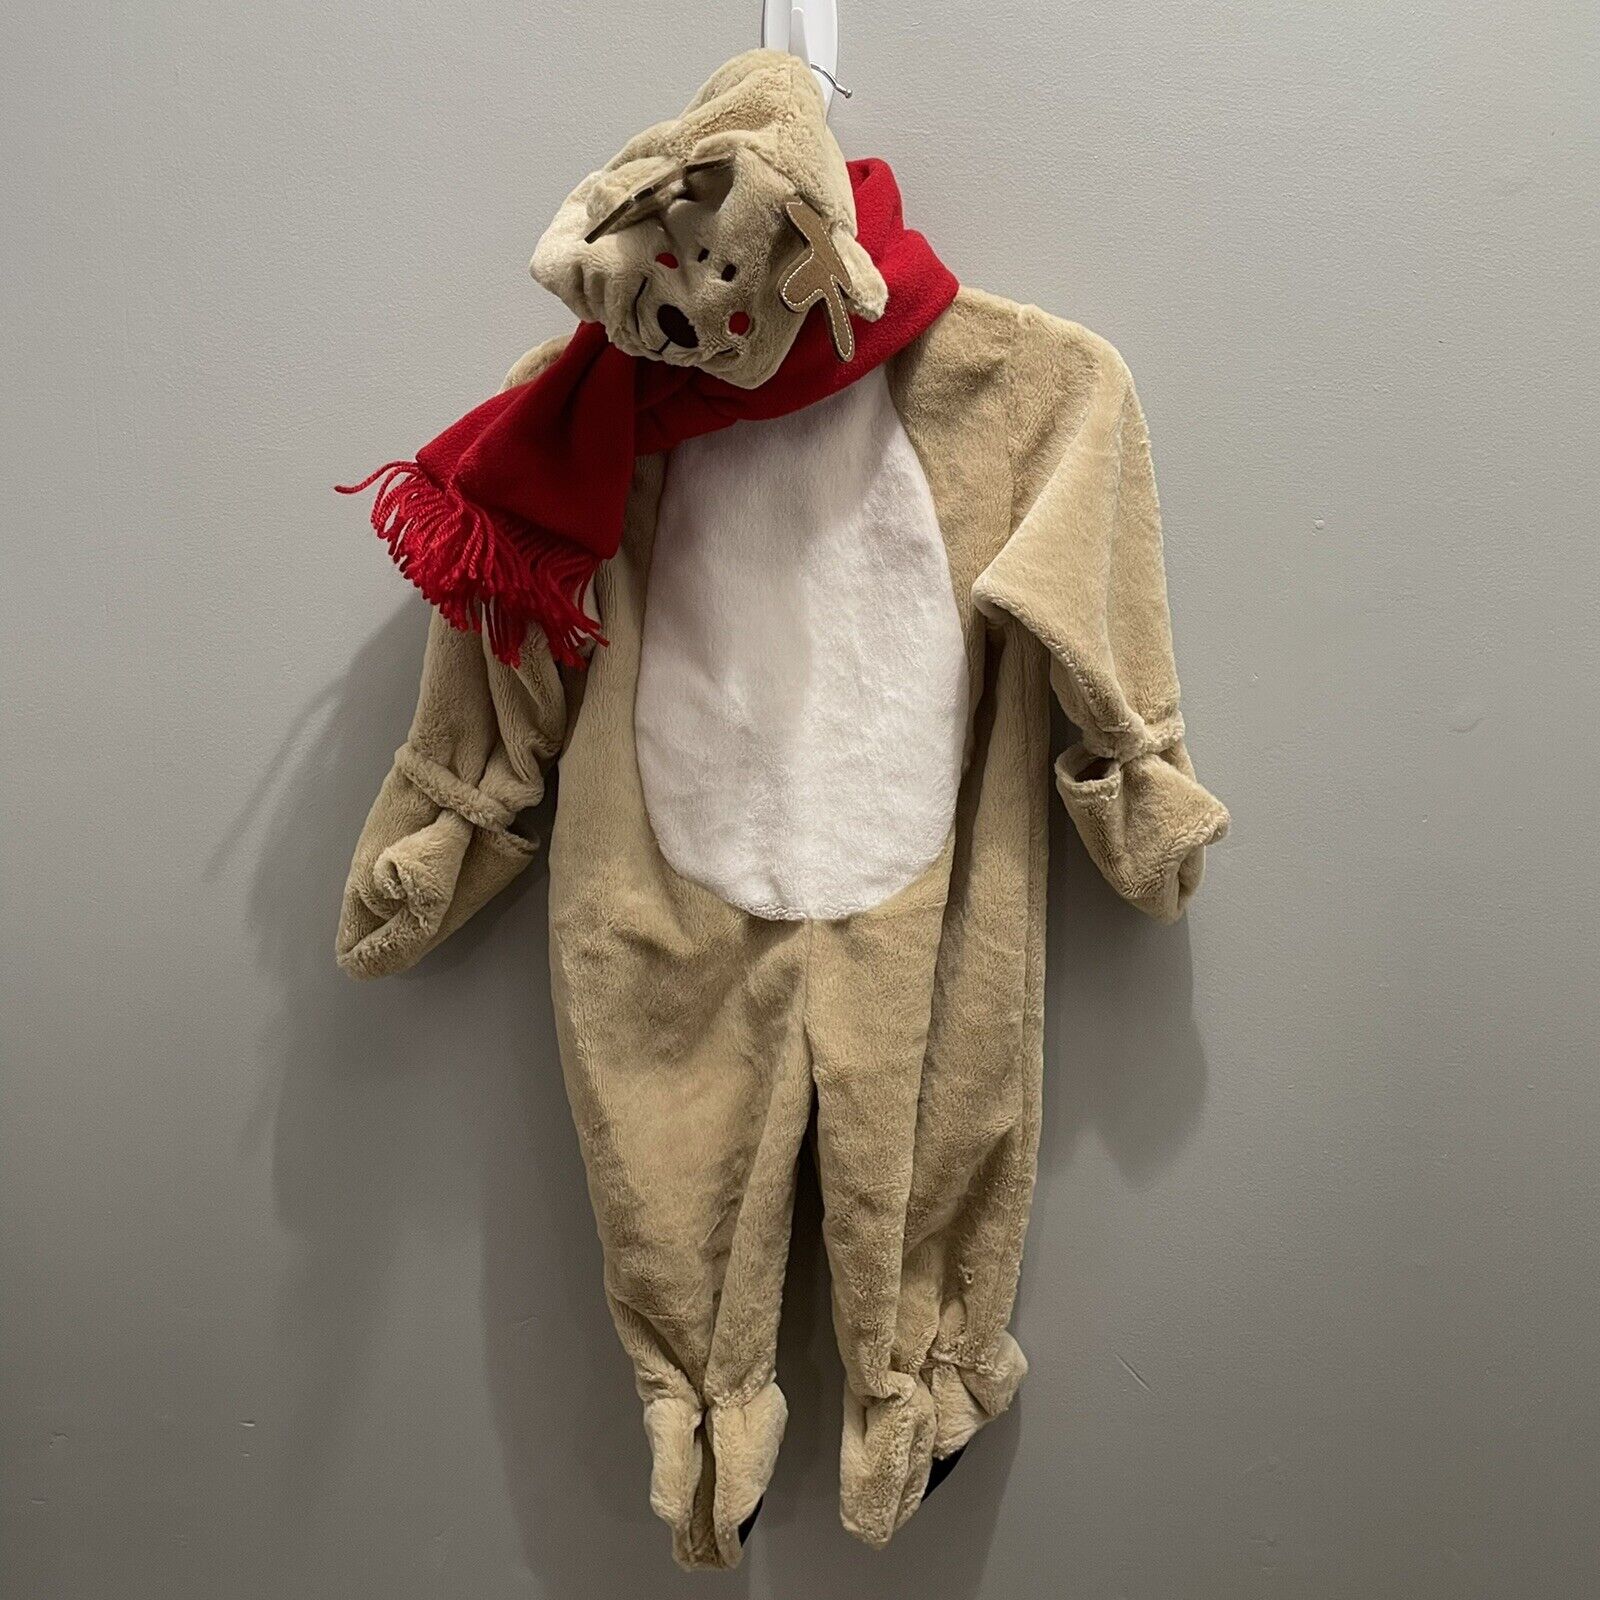 Miniwear baby Reindeer Tulsa Mall months costume 12 Selling rankings